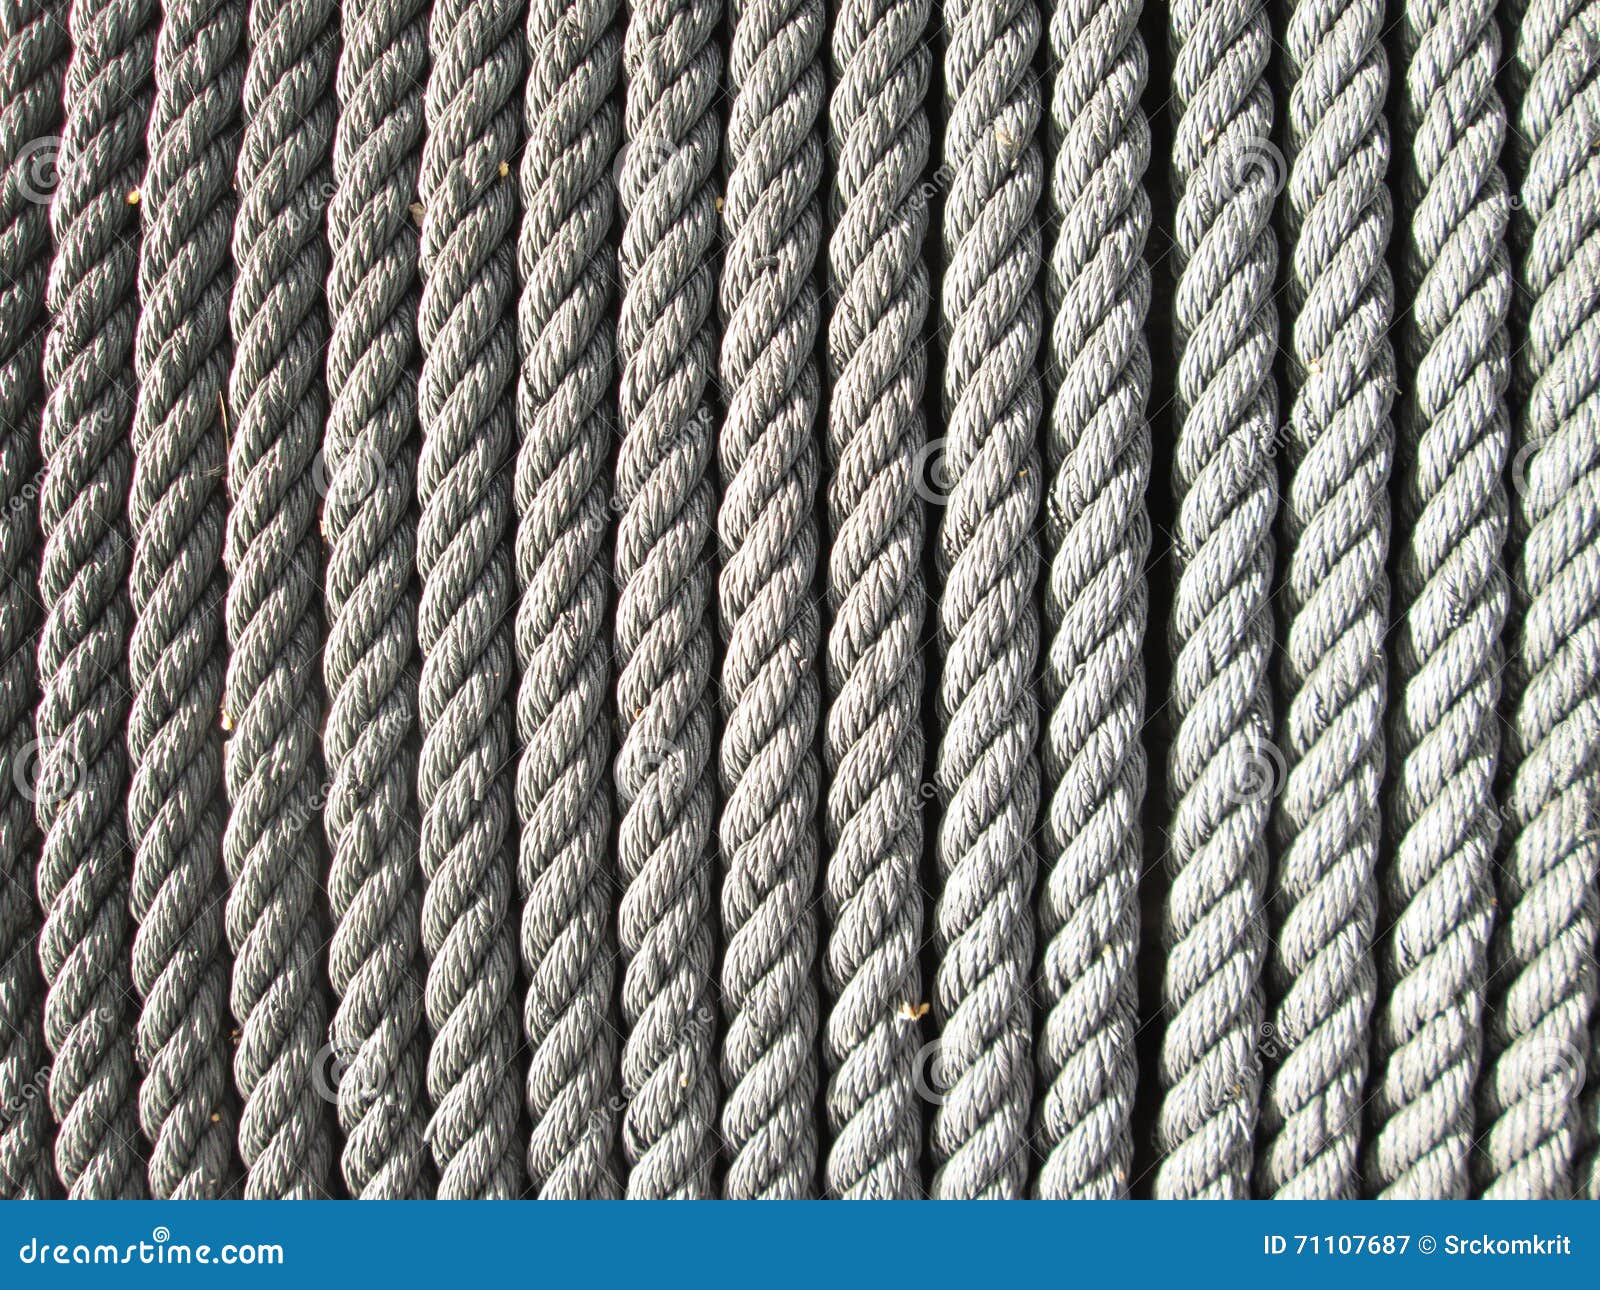 Black Rope Polypropylene Texture Background Stock Photo 1225544029